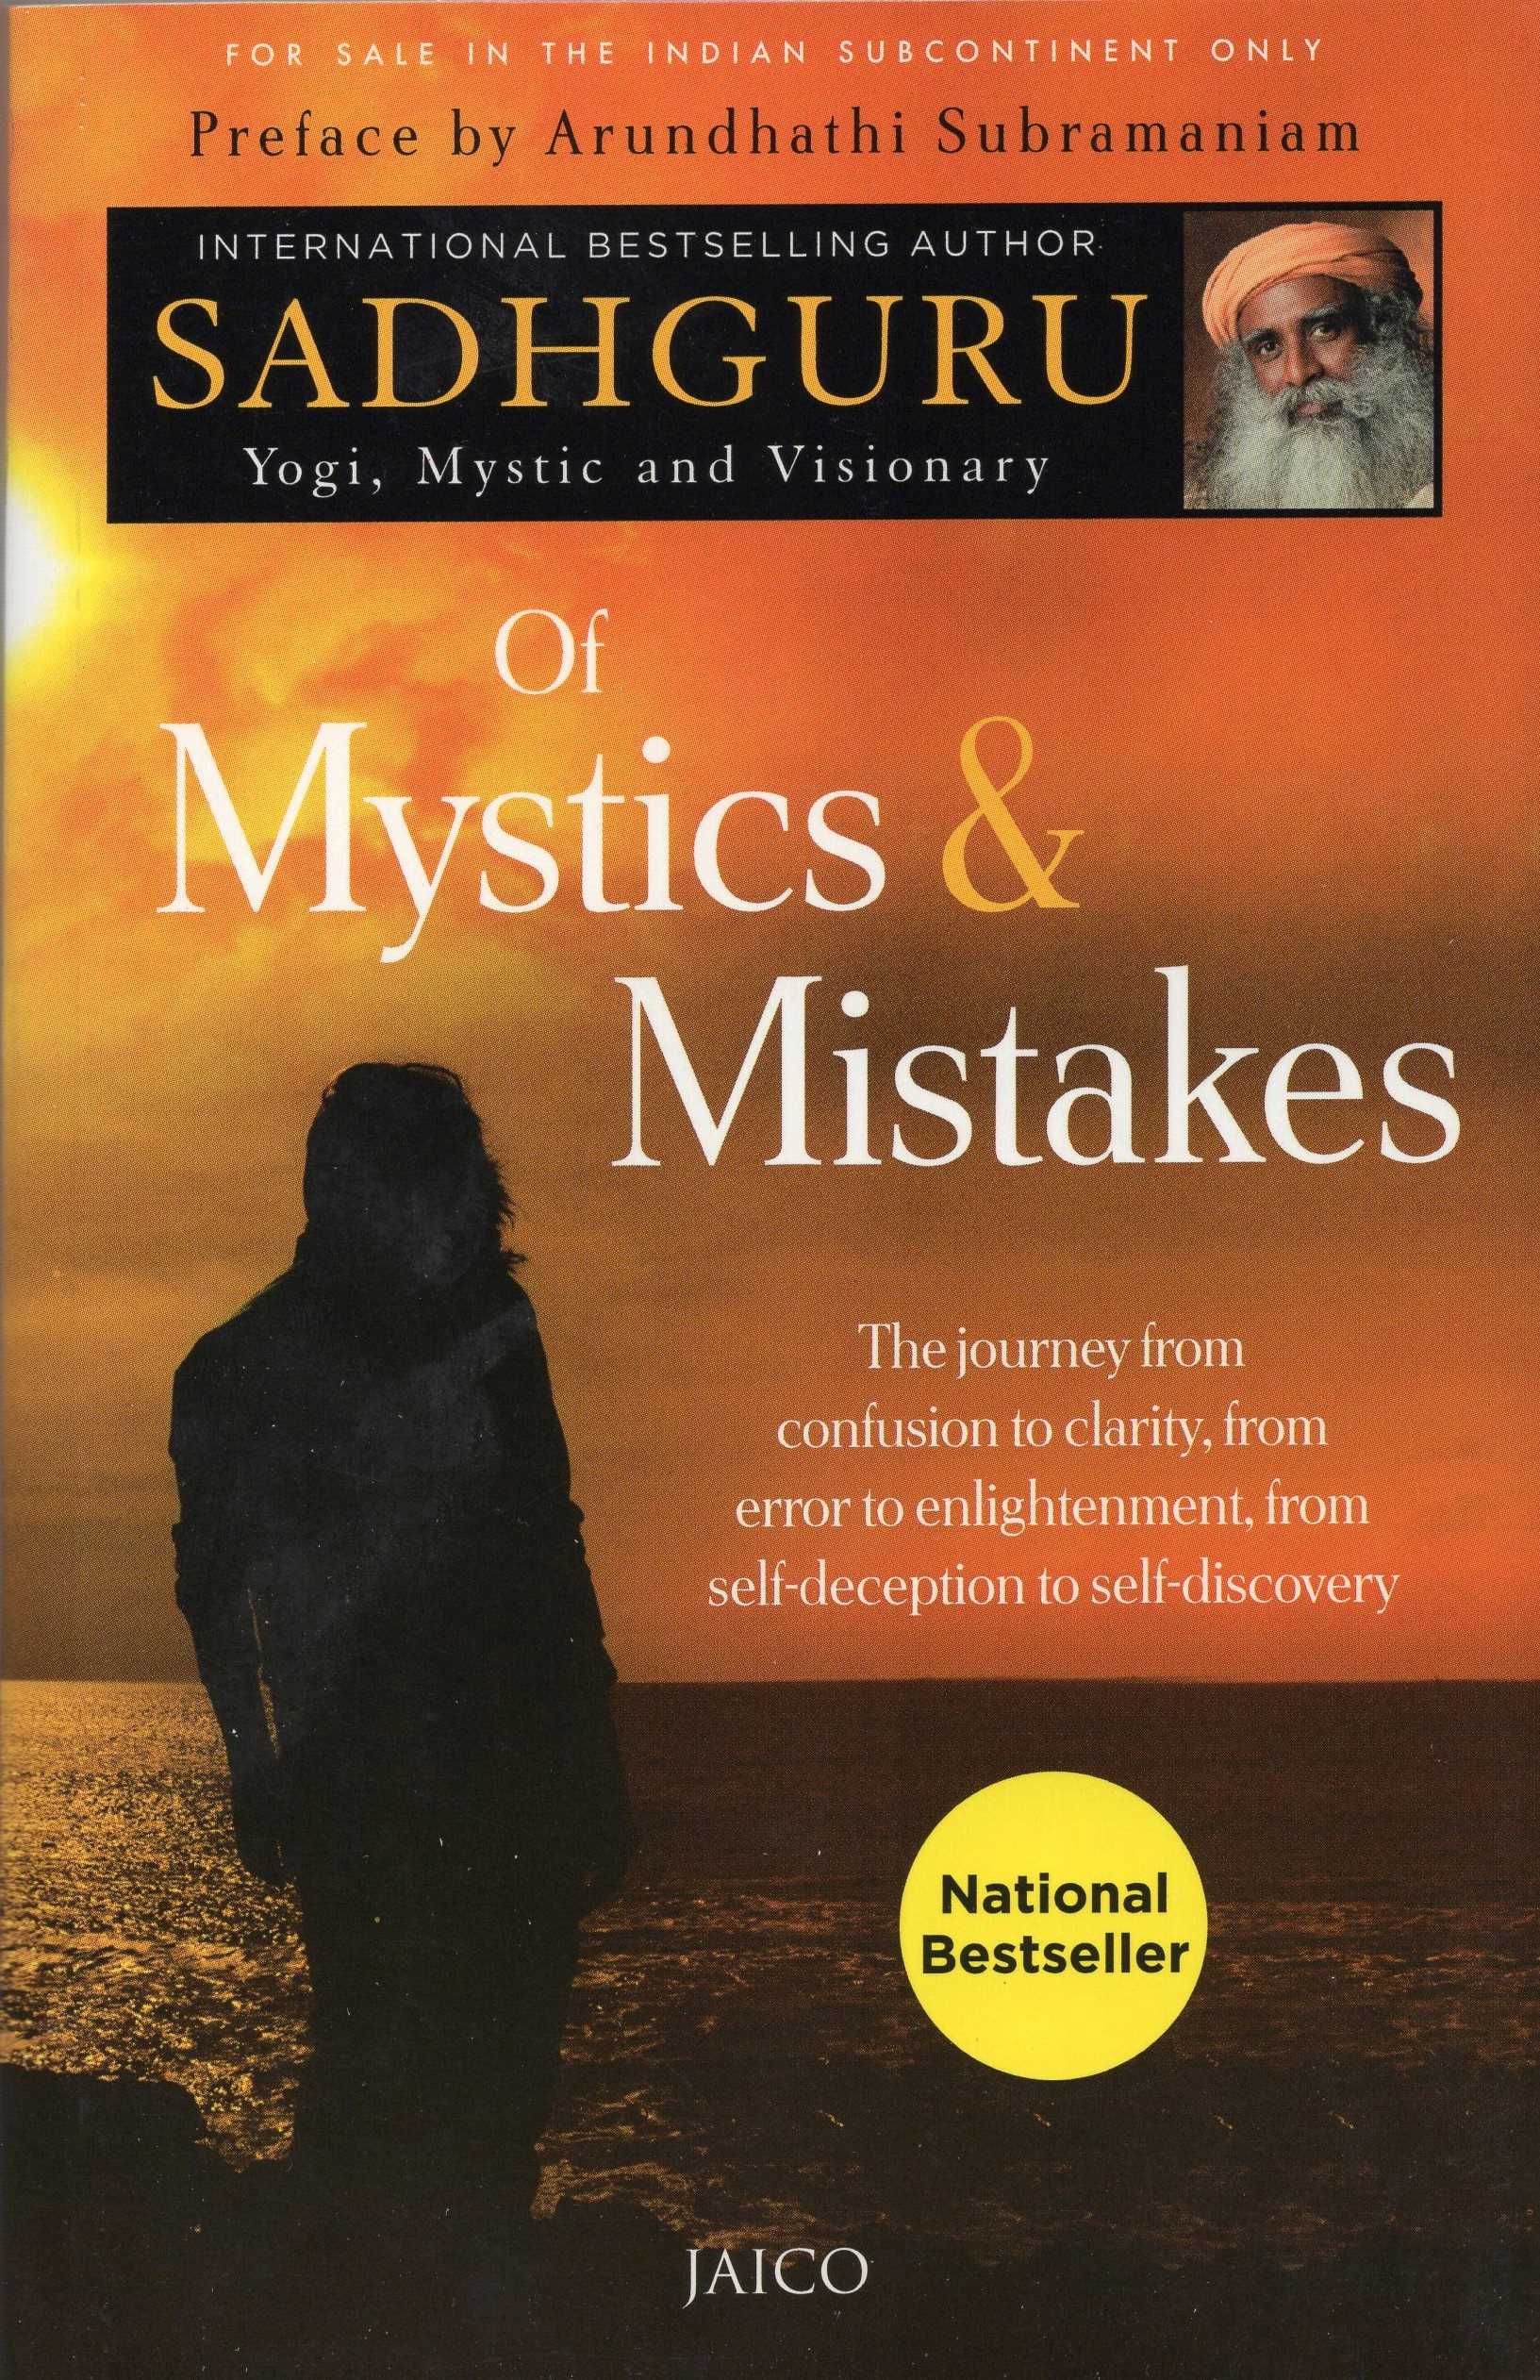 OF MYSTICS & MISTAKES